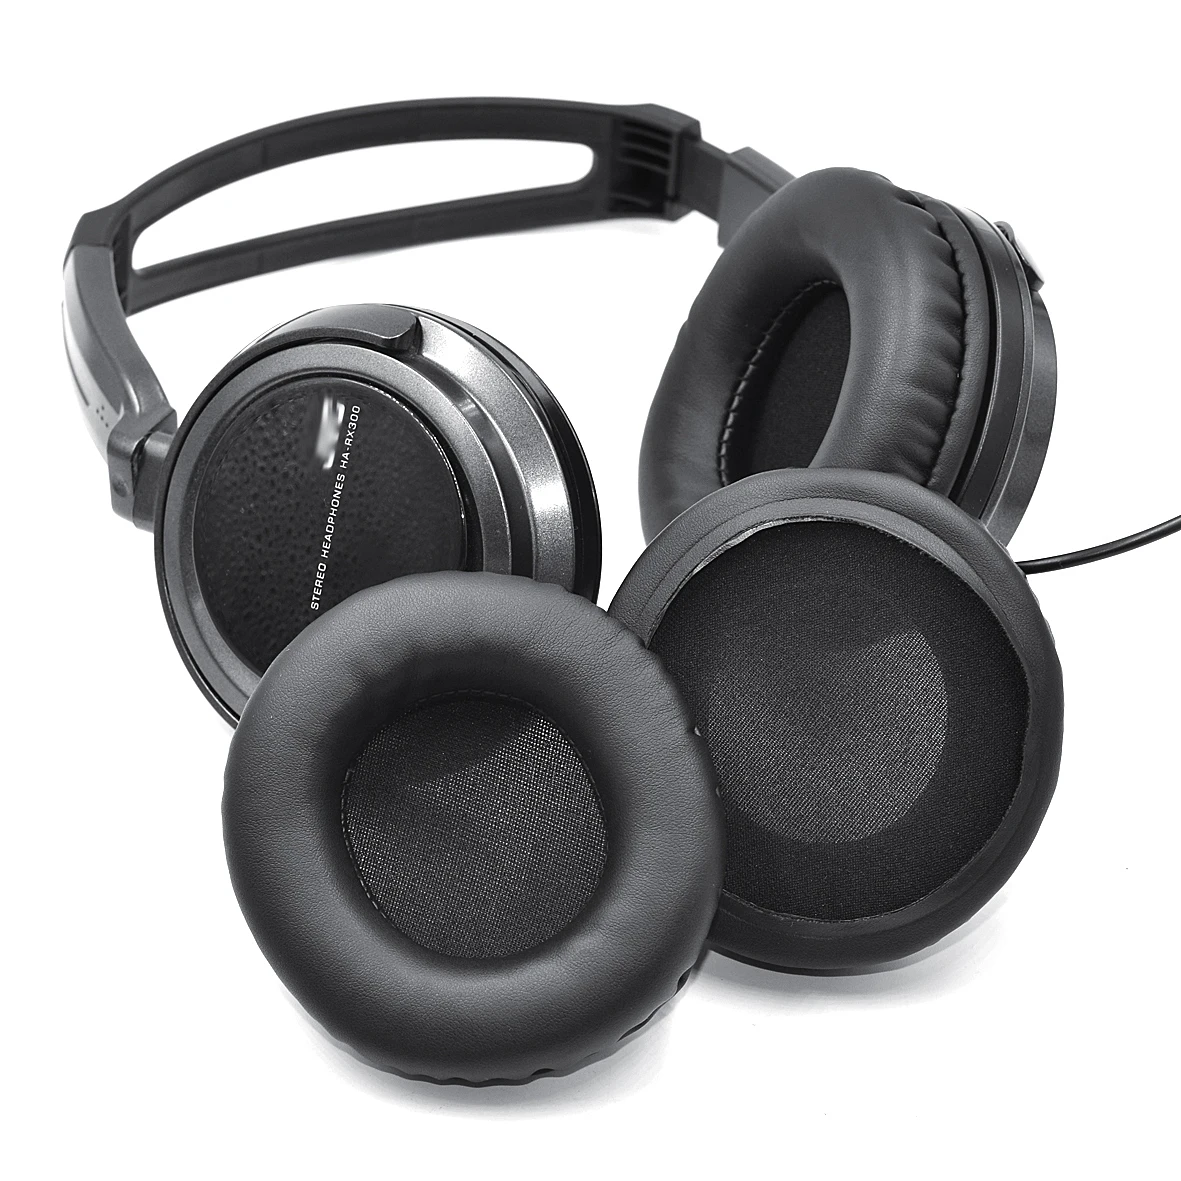 Defean Replacement Ear Pads Cushion earcups For JVC HA-RX300 RX300 HEADBAND HEADPHONES